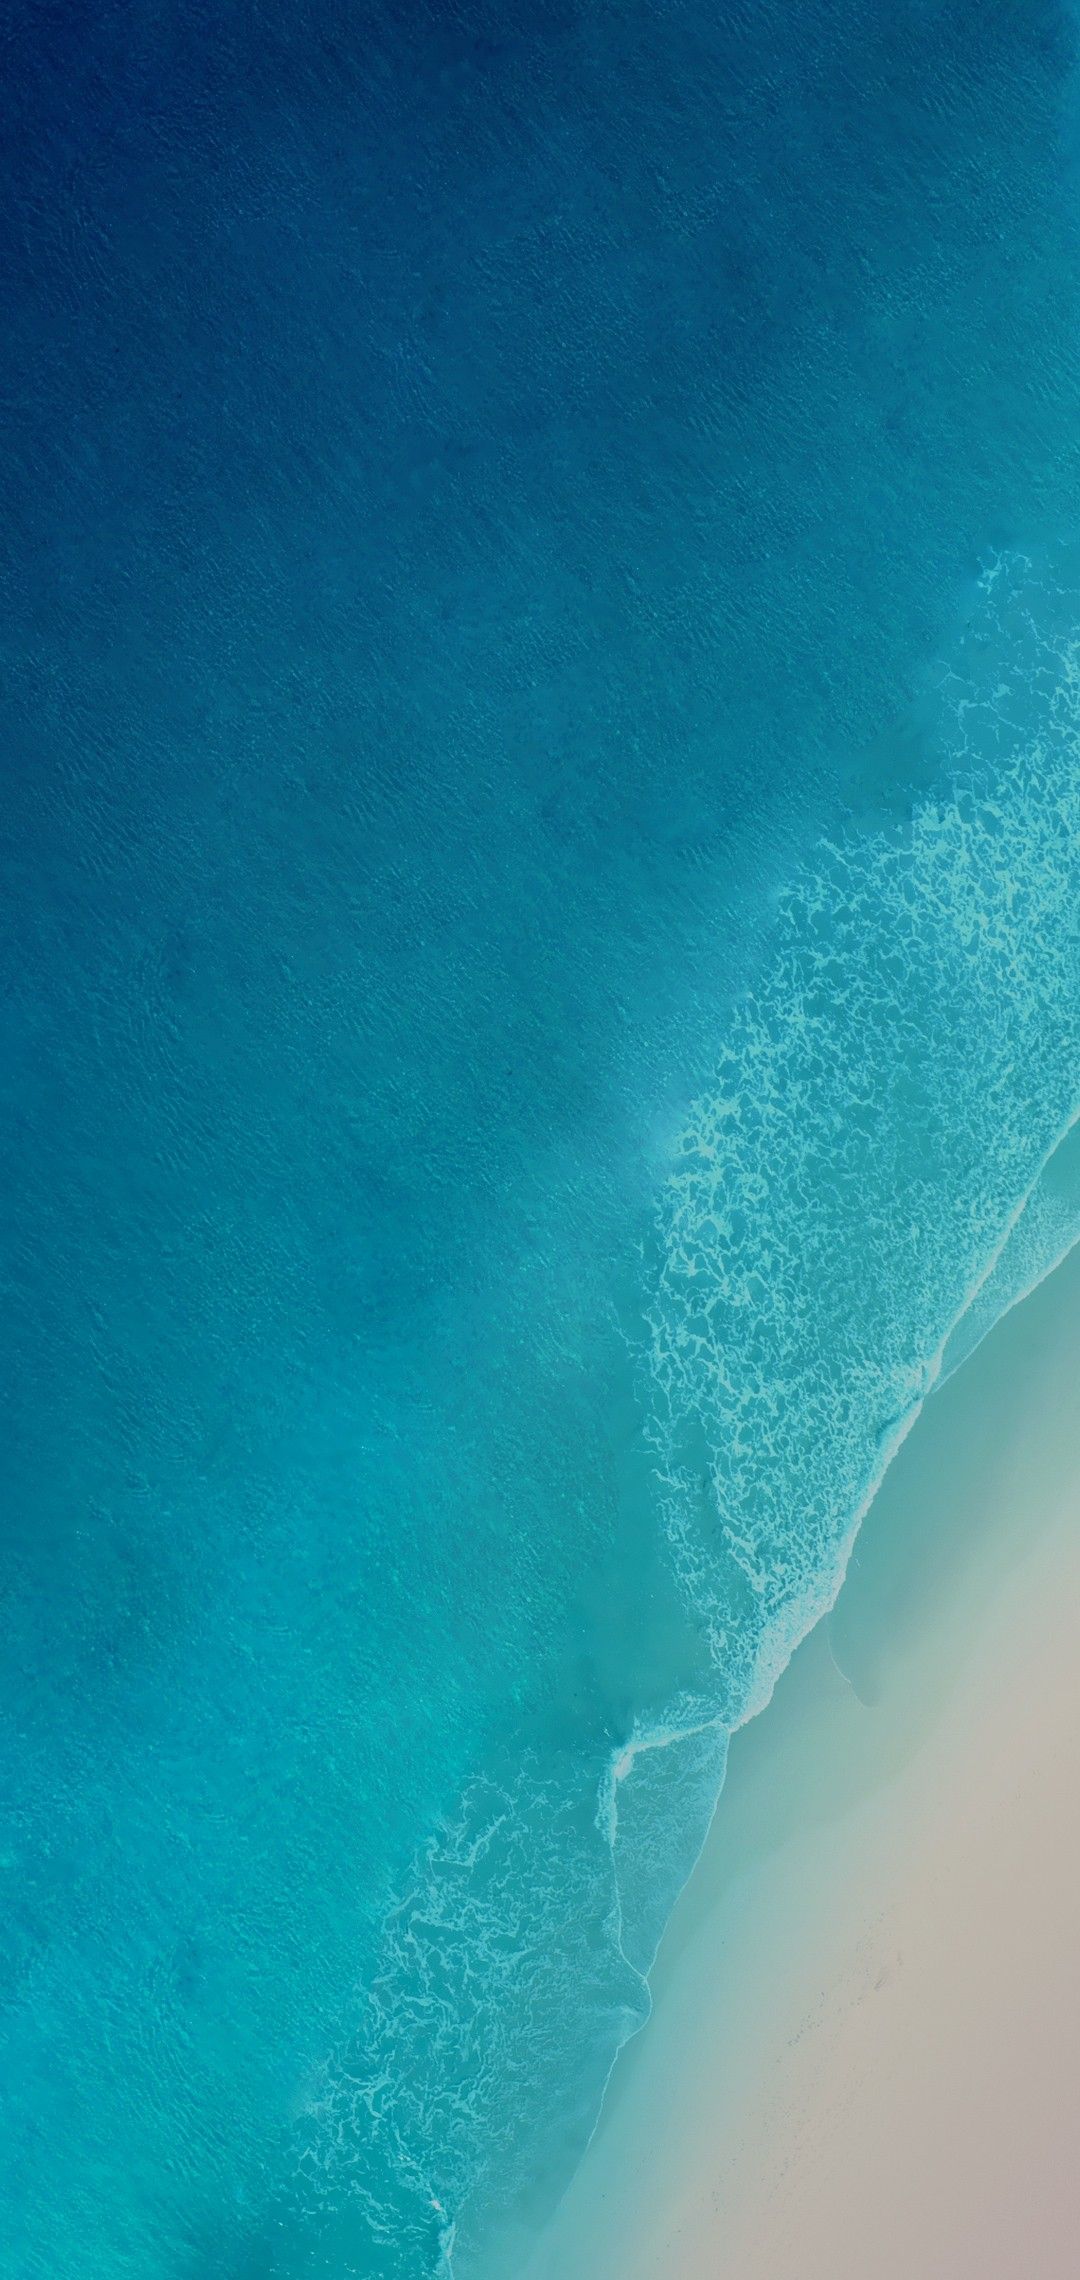 iOS 12 iPhone X Aqua blue Water ocean apple wallpaper